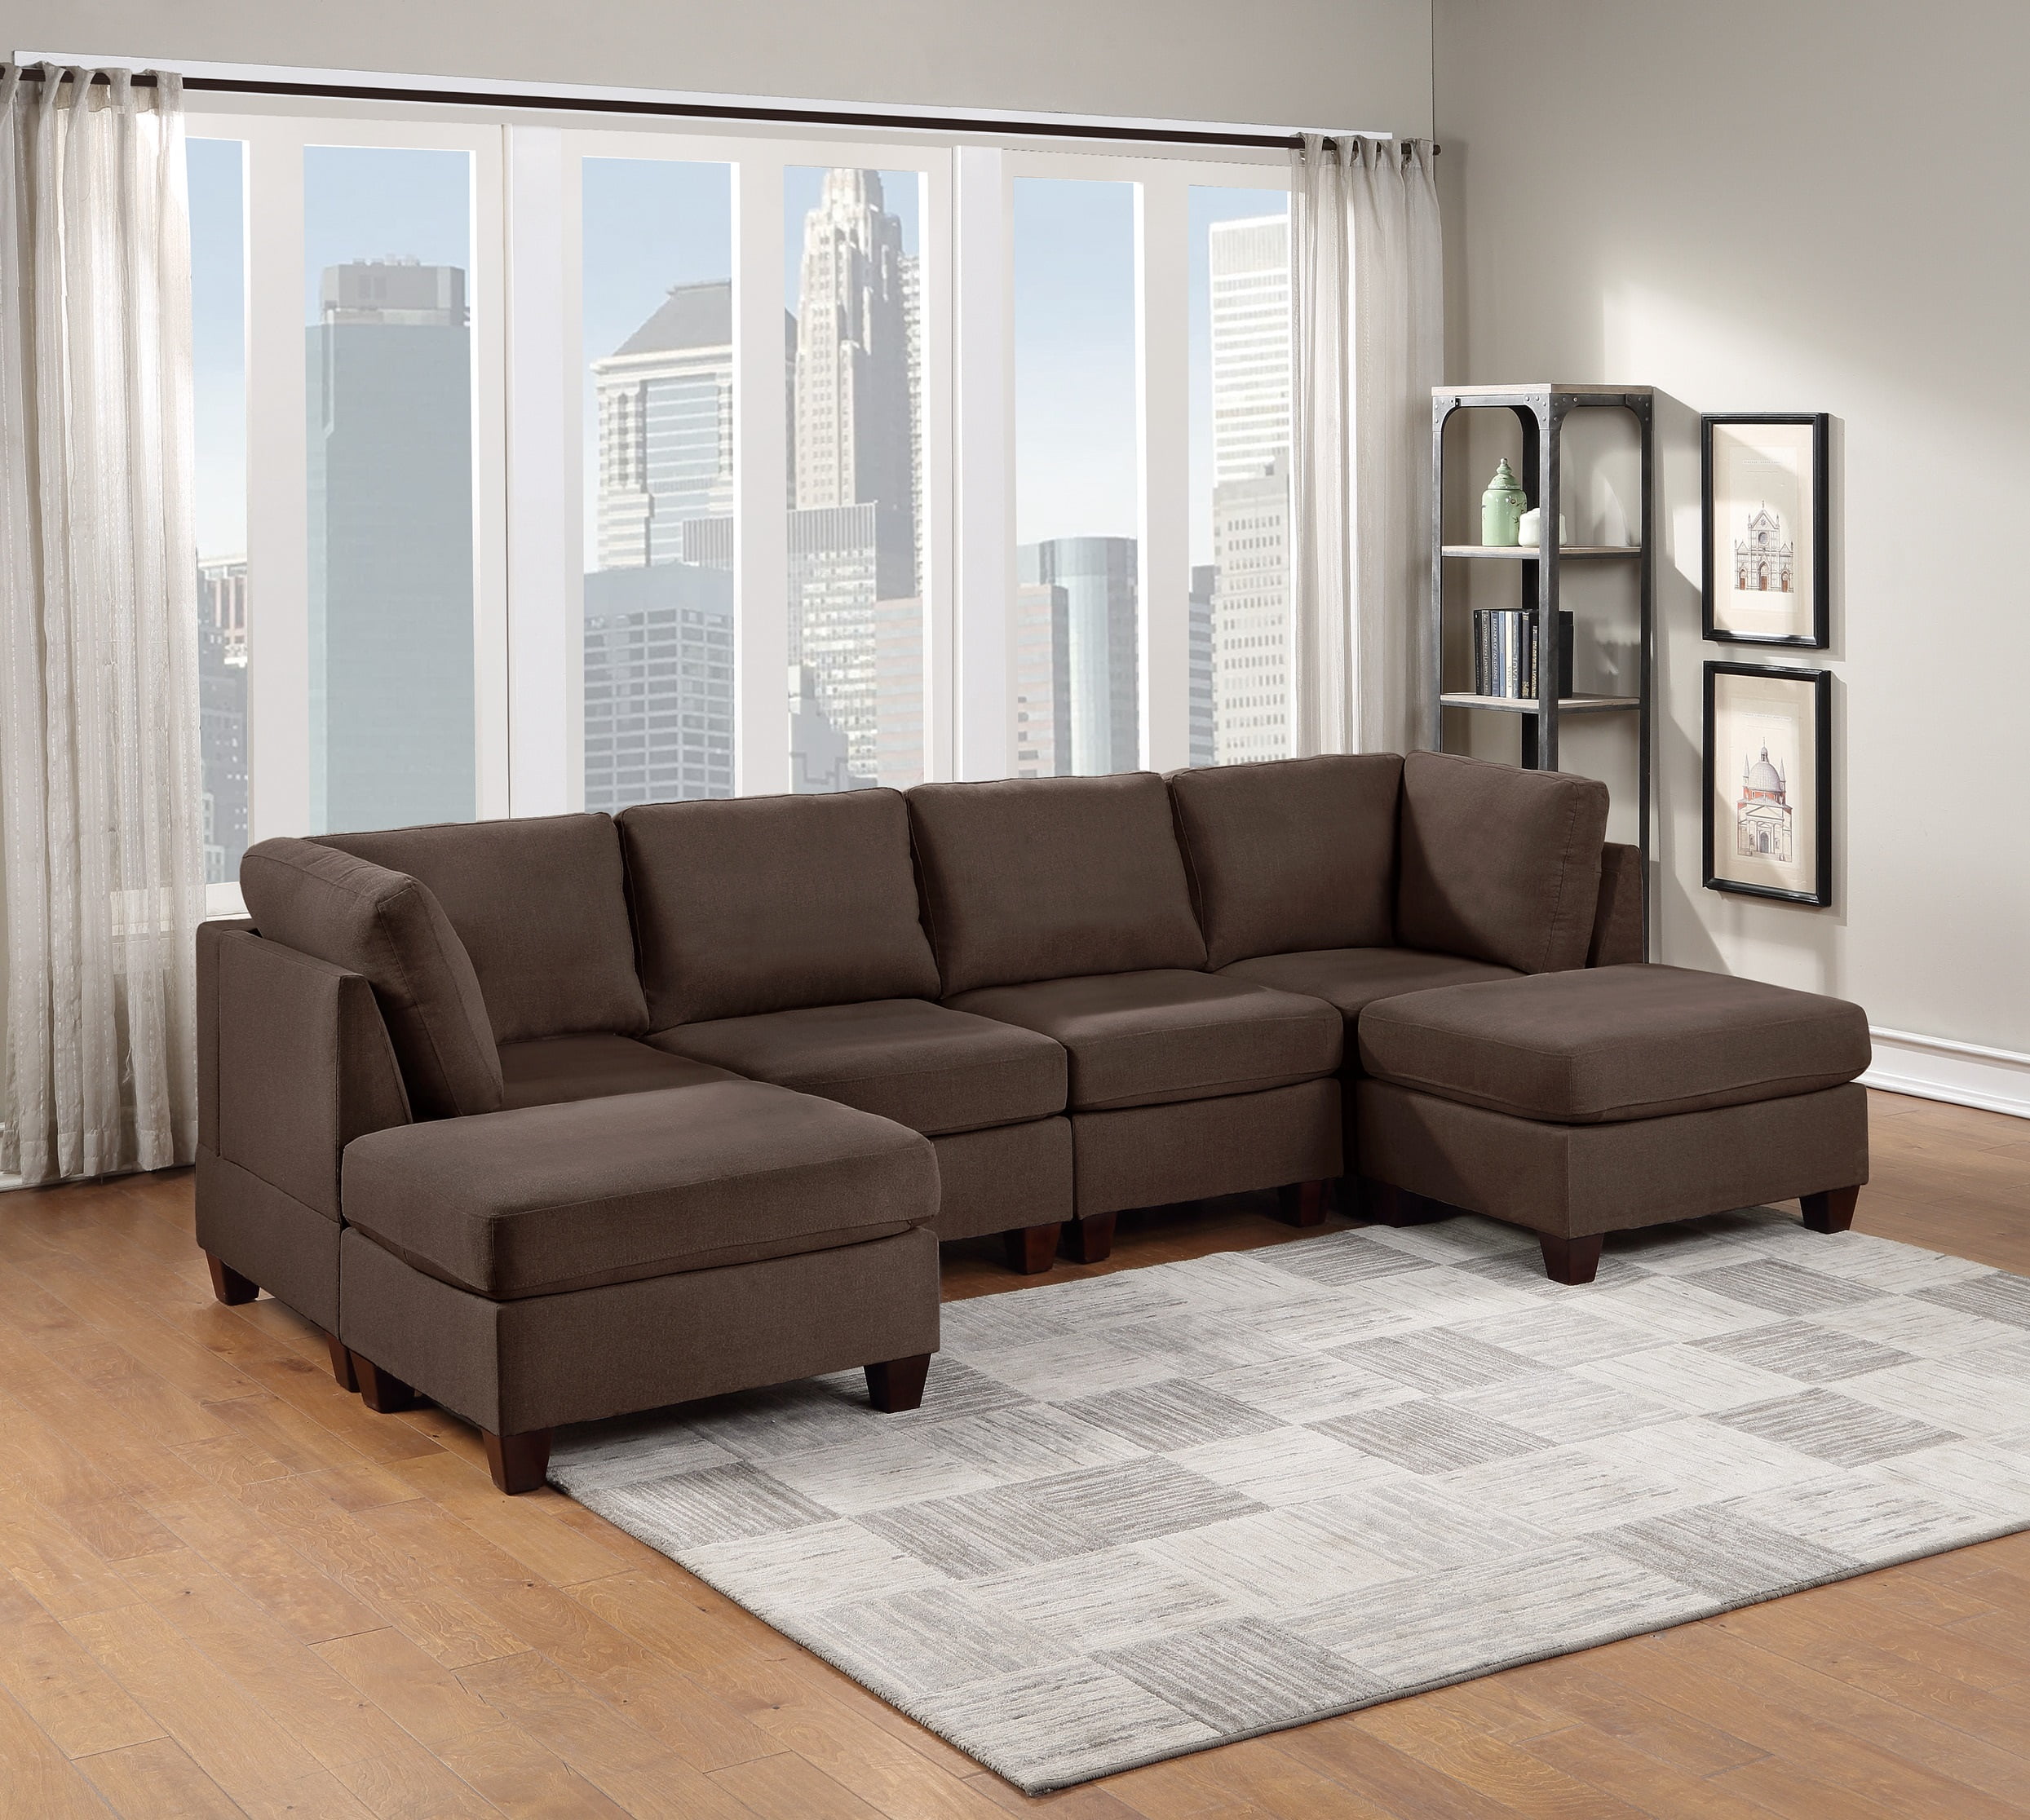 6PCS Contemporary Sectional Modern Sofa Set Microfiber Reversible Chaise Ottoman 